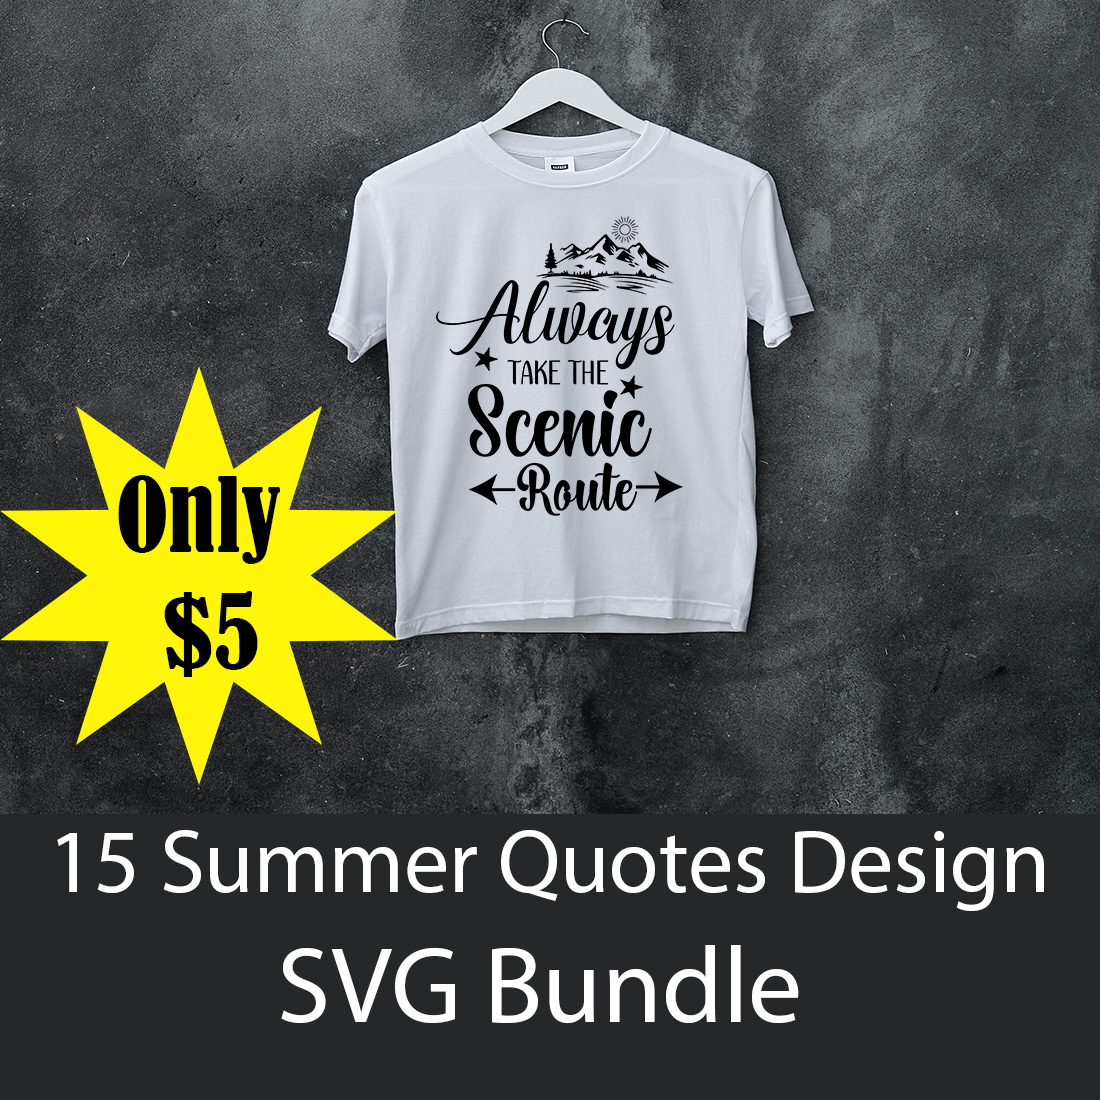 15 Summer Quotes Design SVG Bundle main cover.